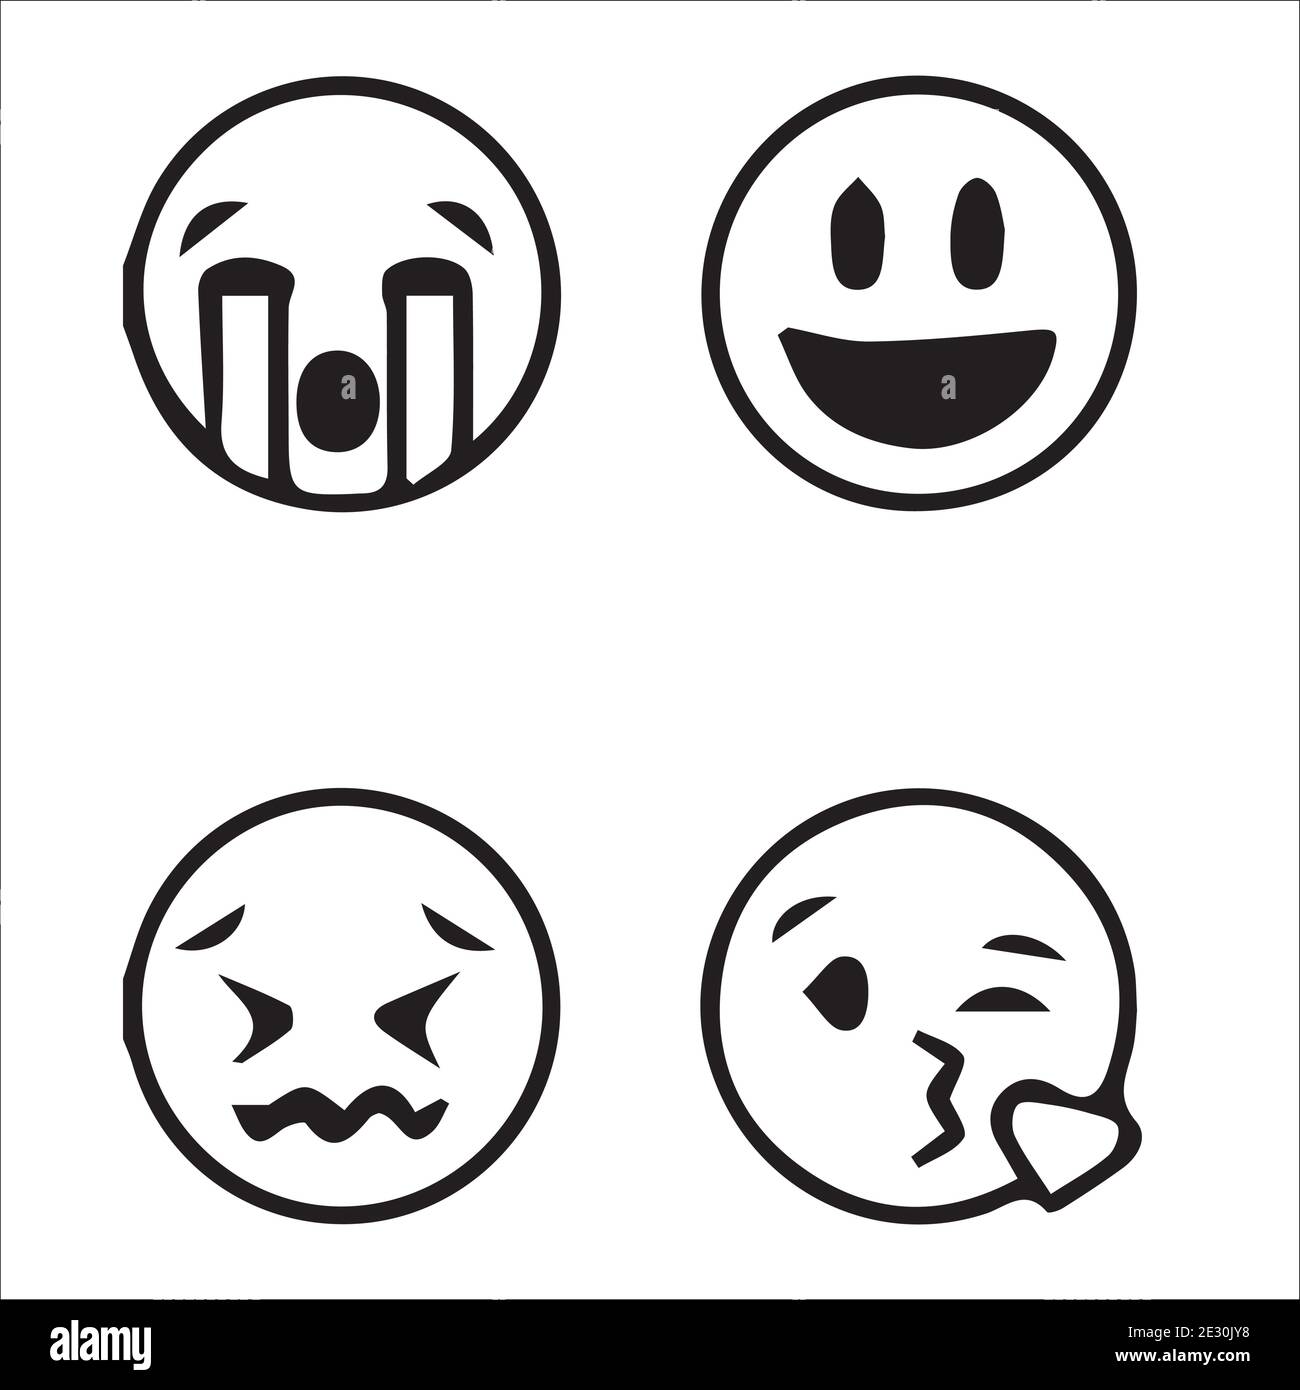 Total 32+ imagen emojis creativos - Viaterra.mx